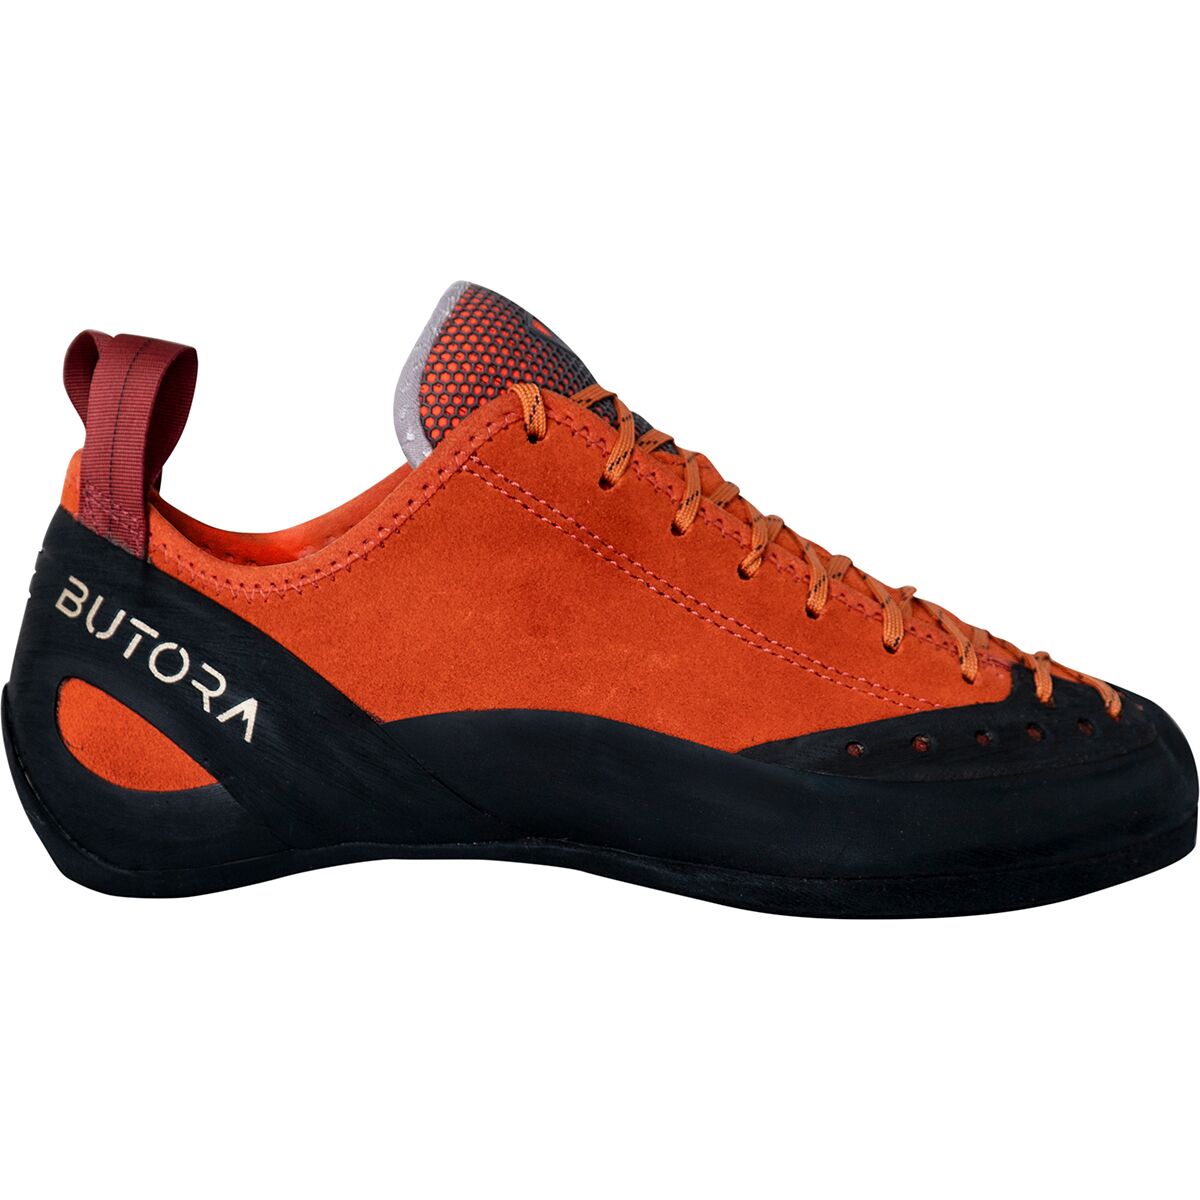 Butora Mantra Climbing Shoe - Tight Fit